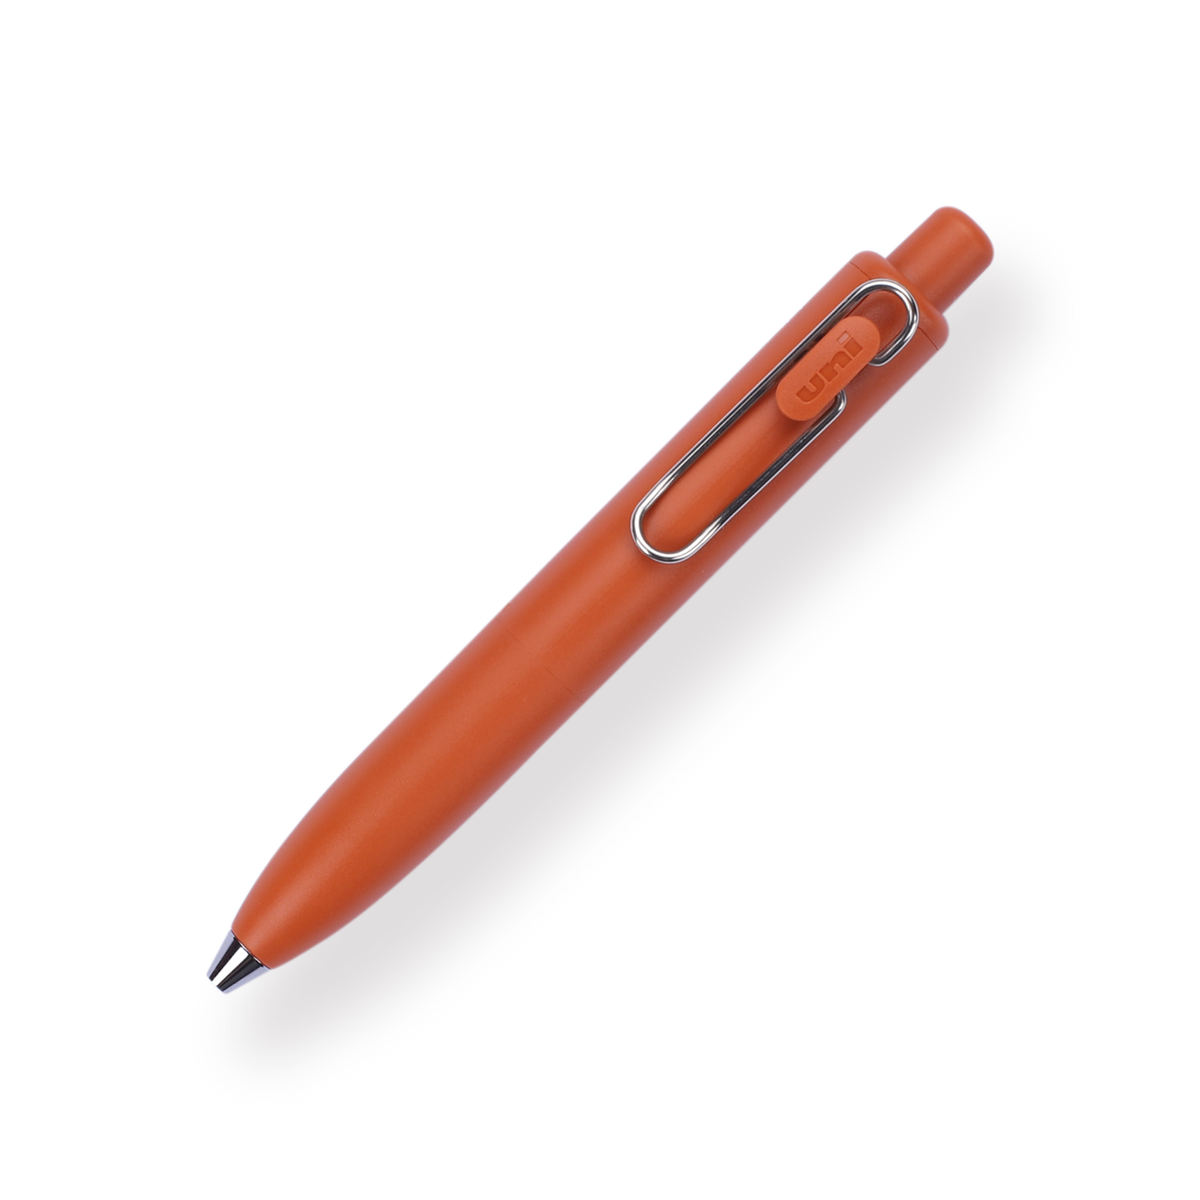 Pink & Orange Ombré Journal + Pen